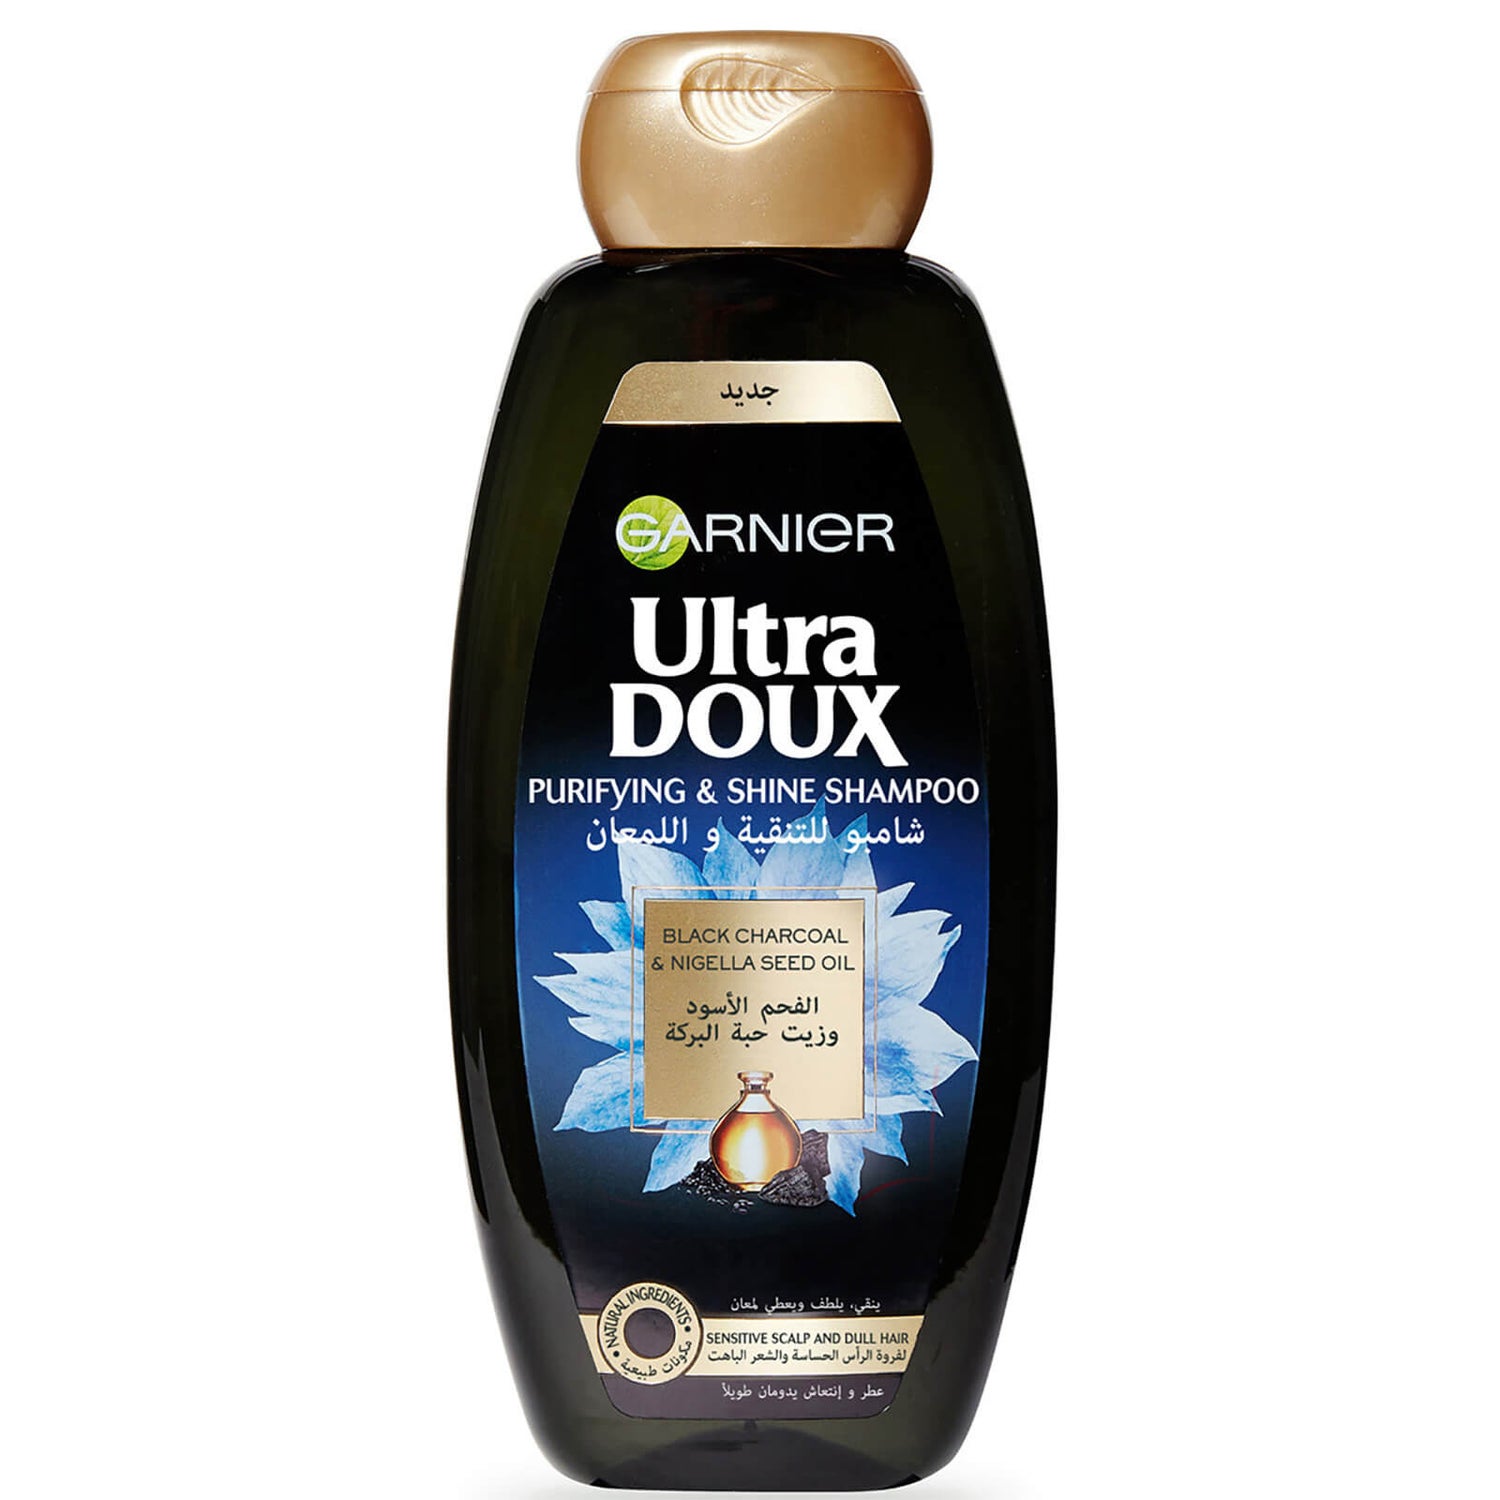 Shampoing Ultra-doux Kind mádara